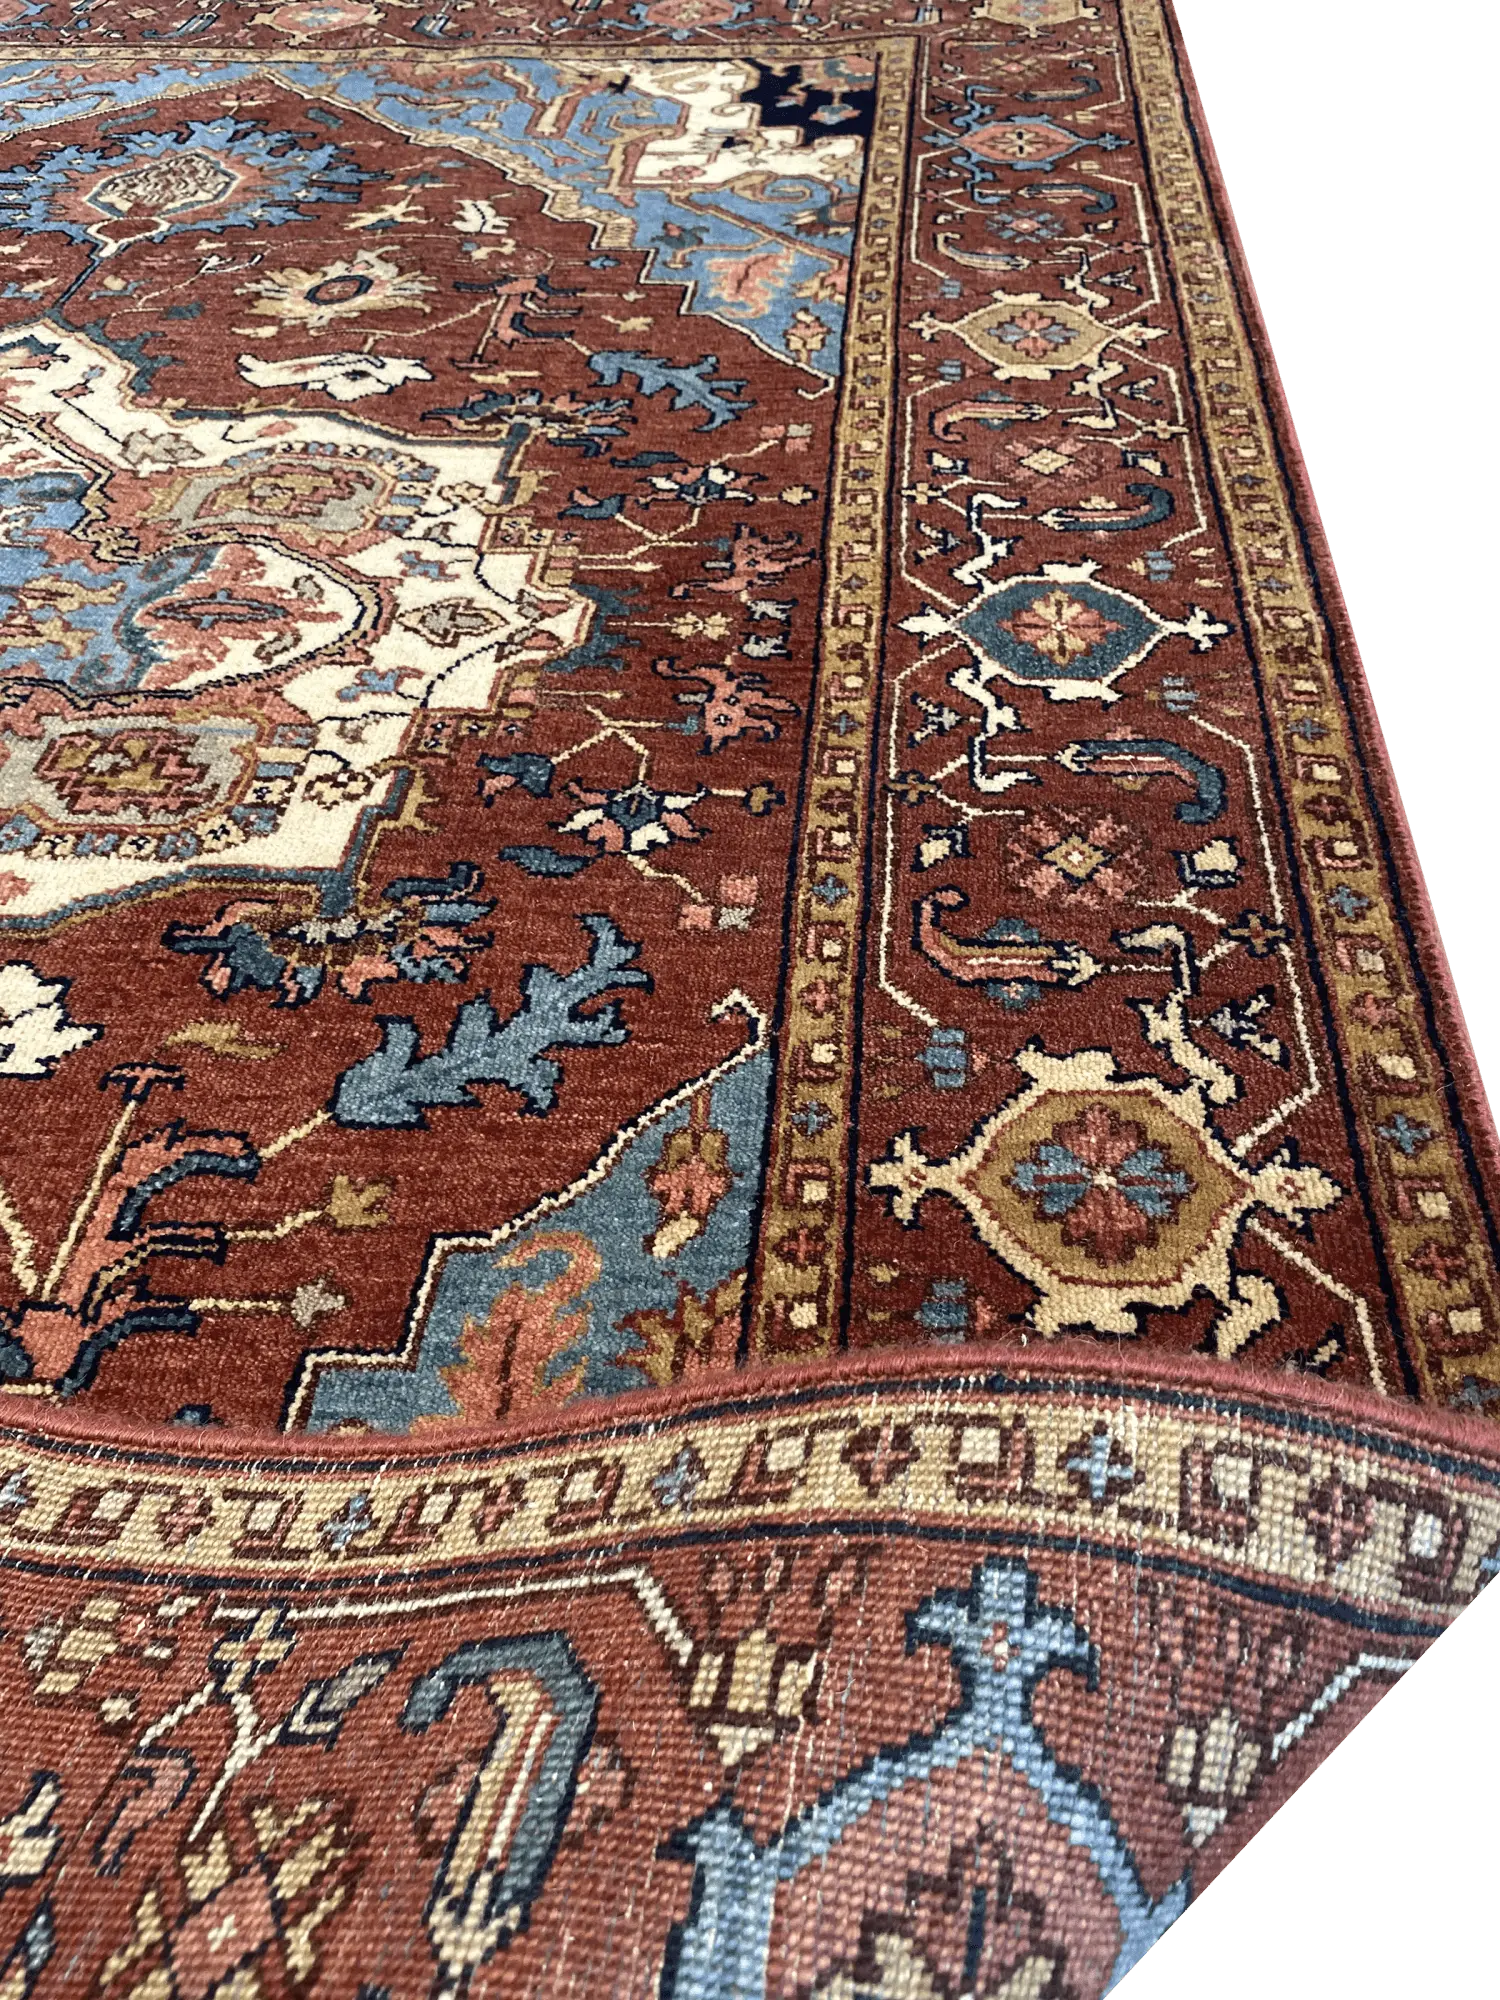 Heriz 5' x 6' 10" Wool Handmade Area Rug - Shabahang Royal Carpet